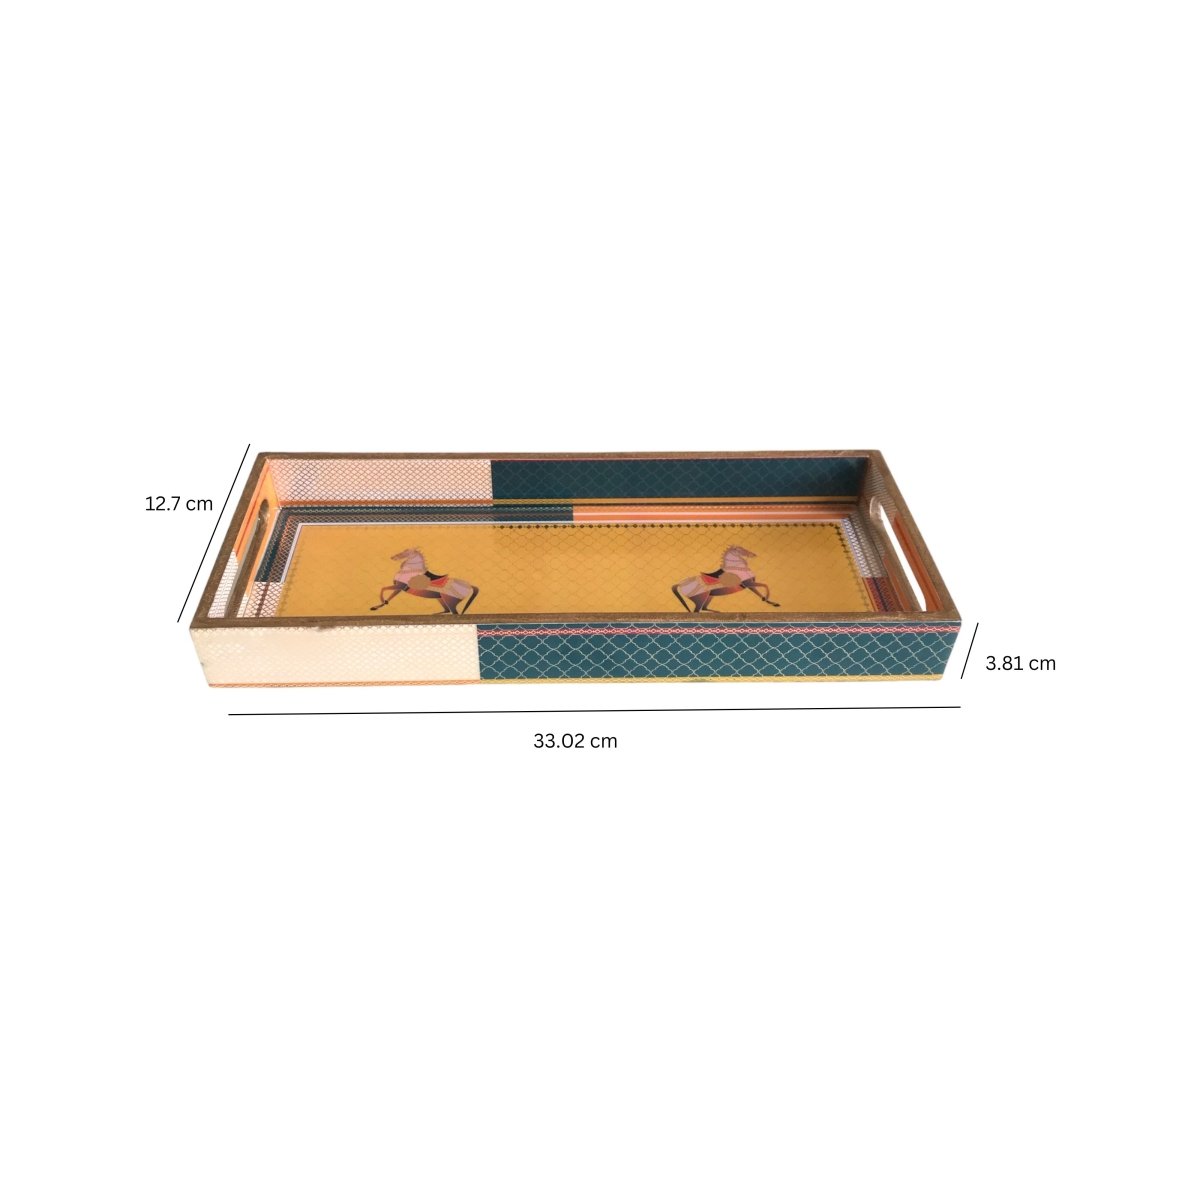 Kezevel Wooden Decorative Tray - Stylish Designer Serving Tray with Horse Pattern for Table Decor, Dinning Table Tray, Size 33.02X12.7X3.81 CM - Kezevel